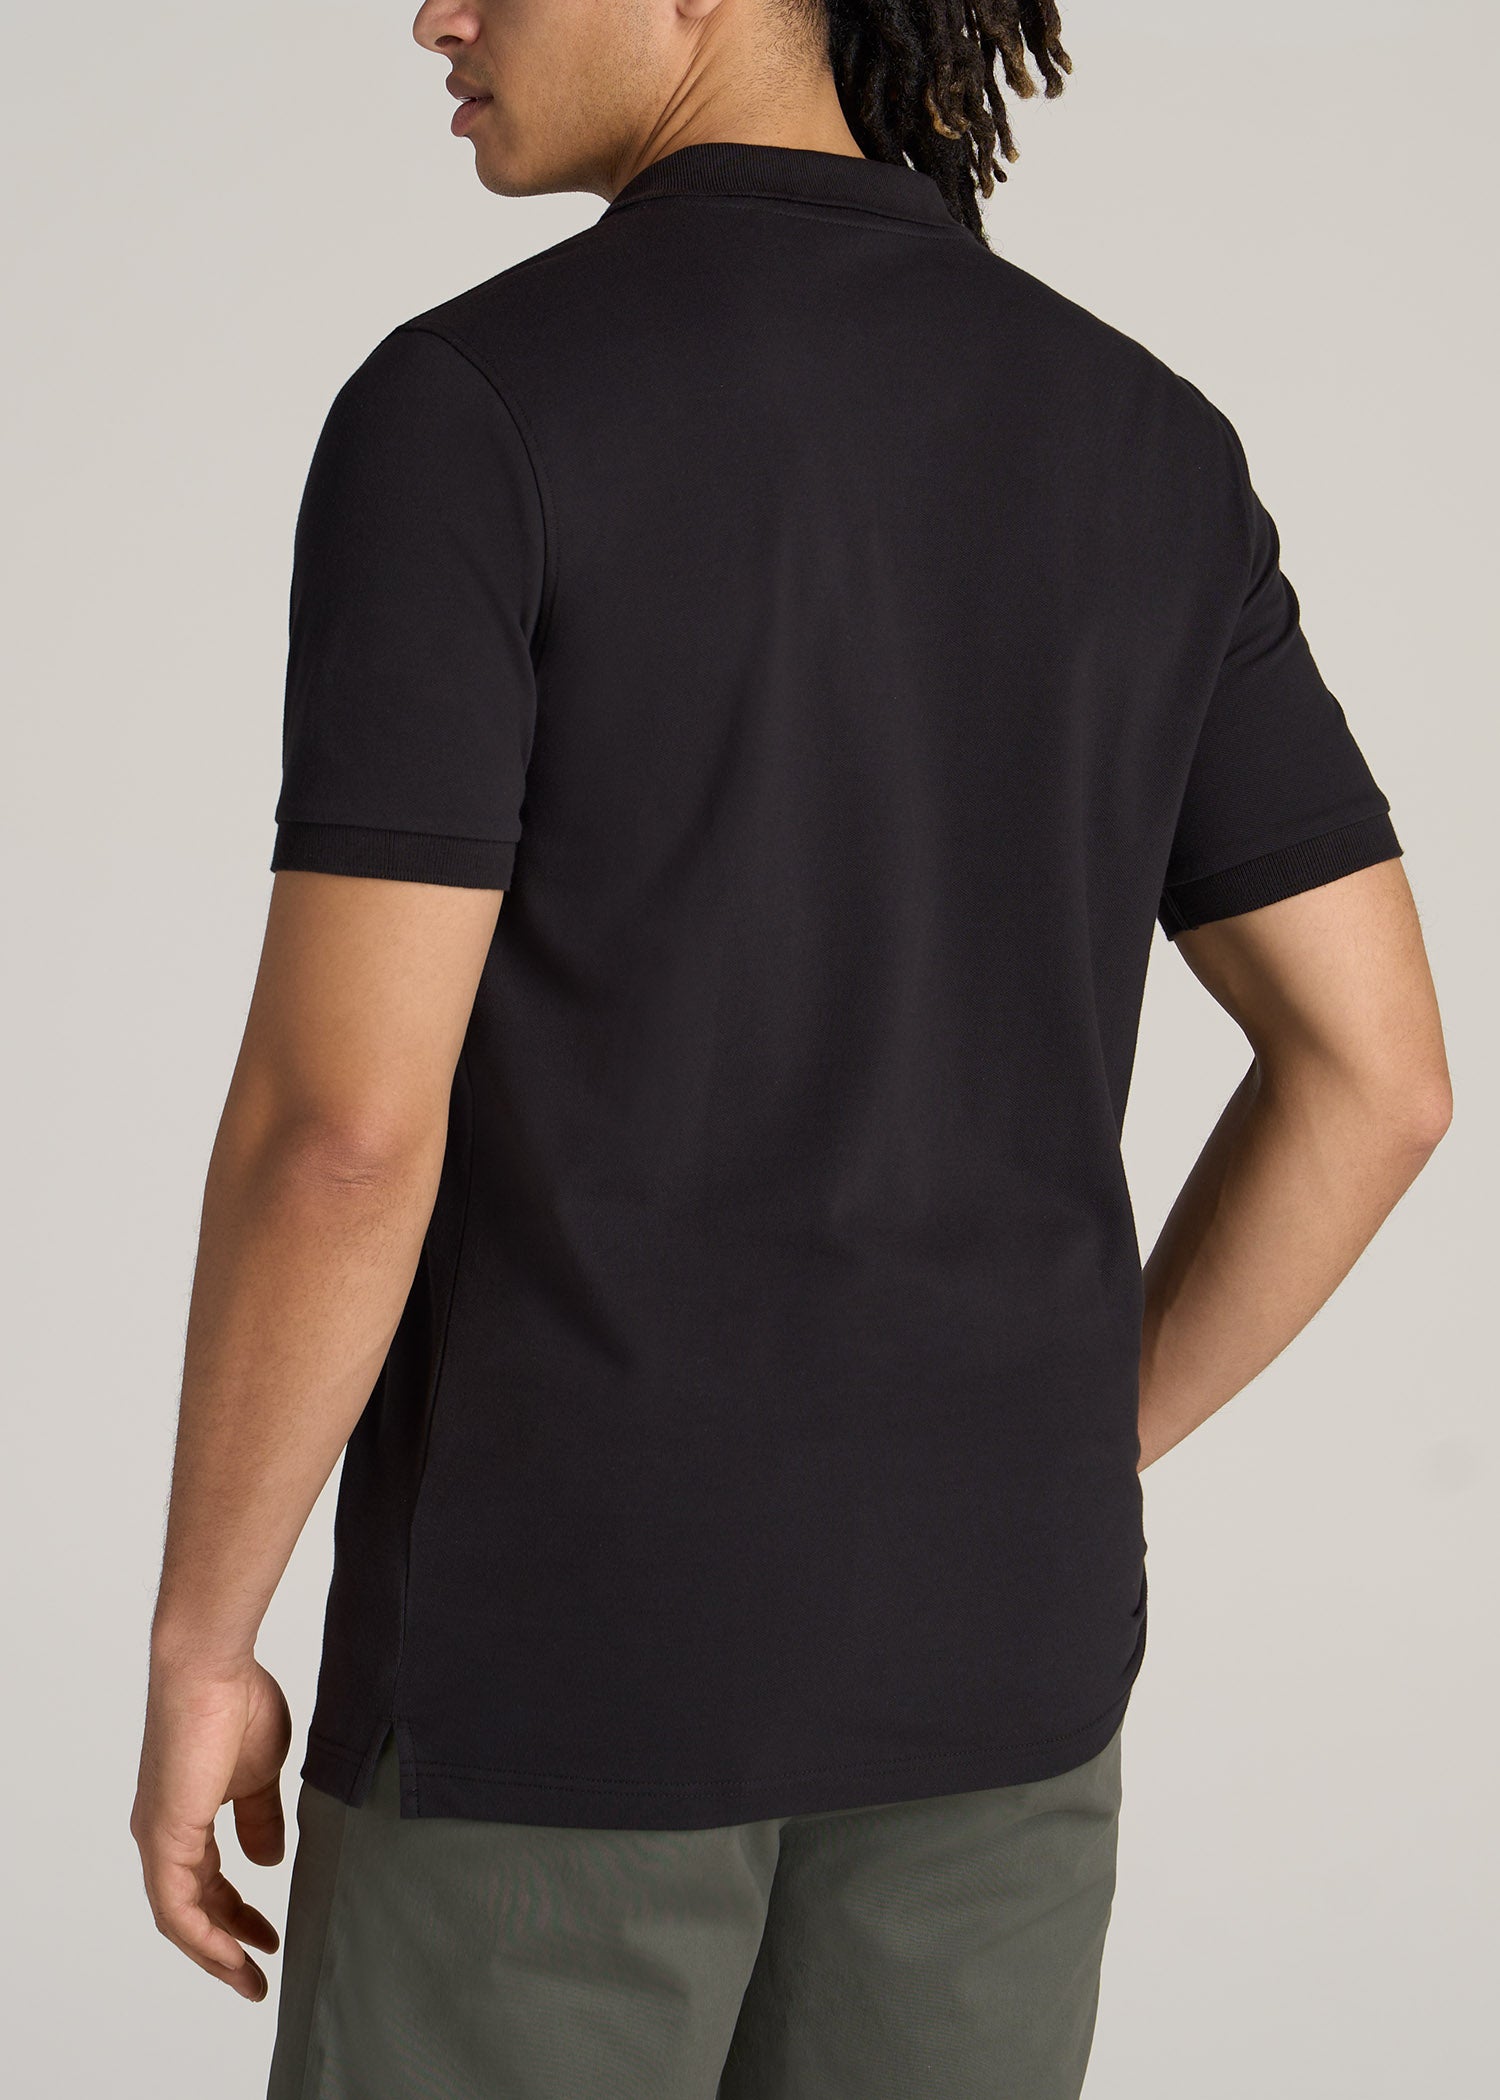 American Tall Embroidered Logo Polo Shirt: Tall Men's Black Polo Shirt